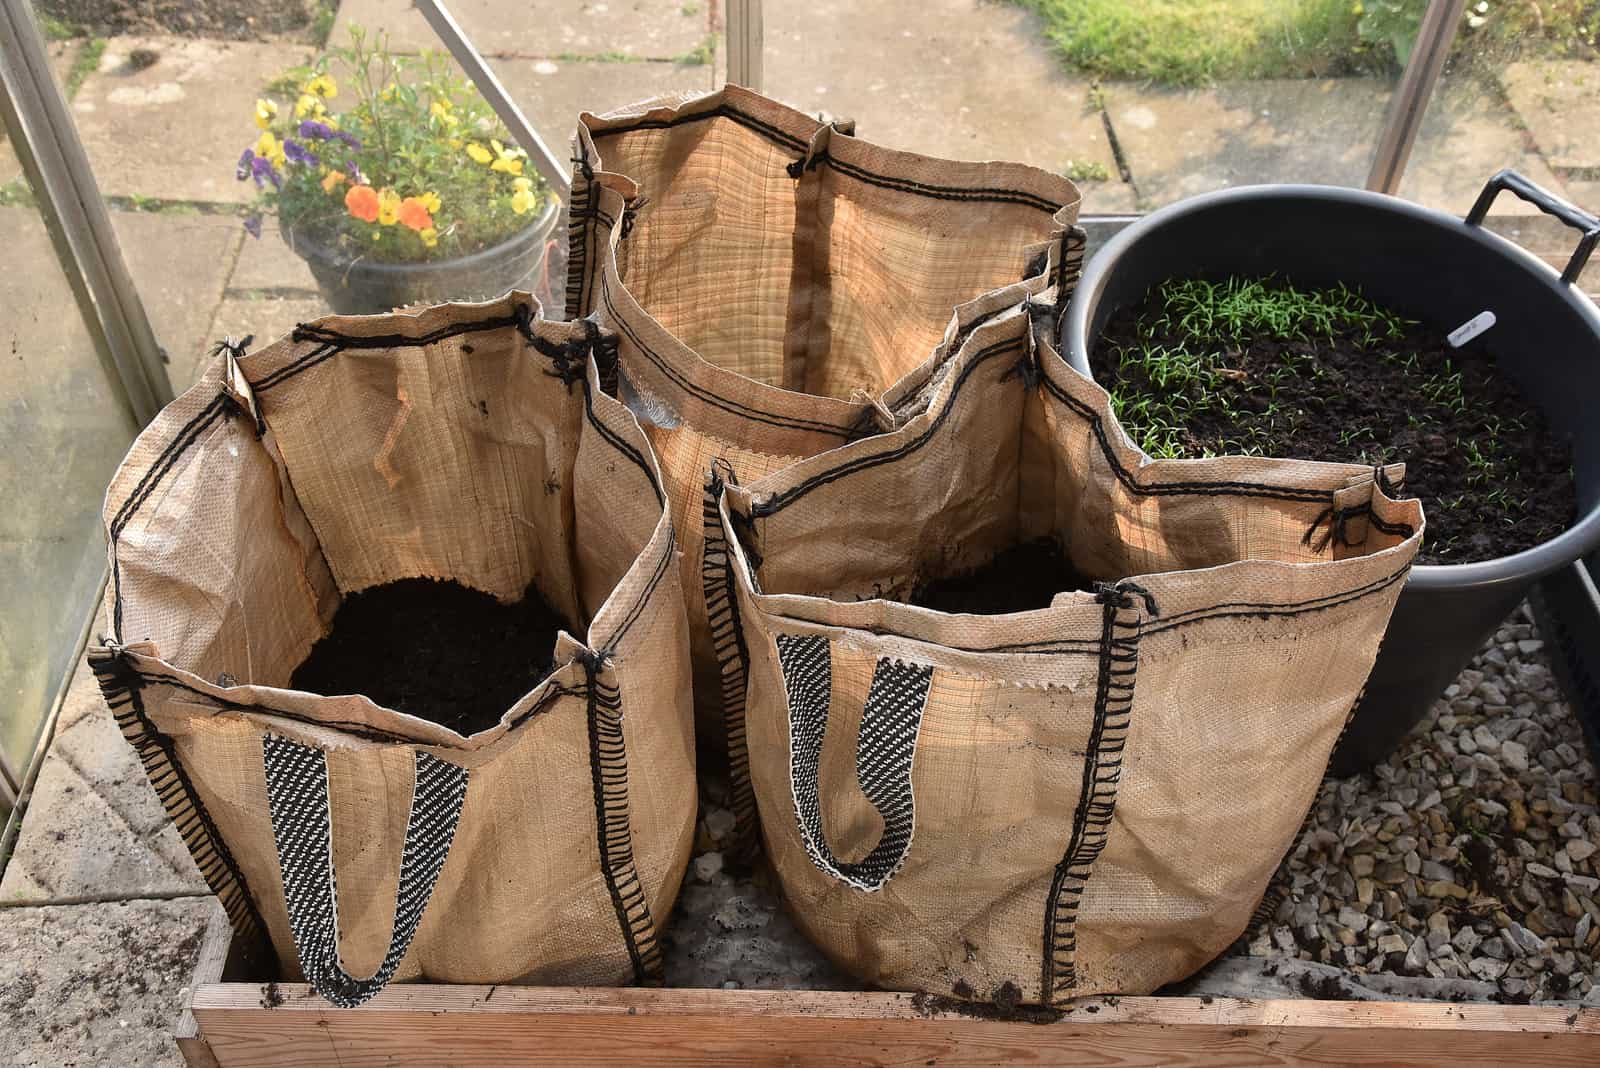 grow bags